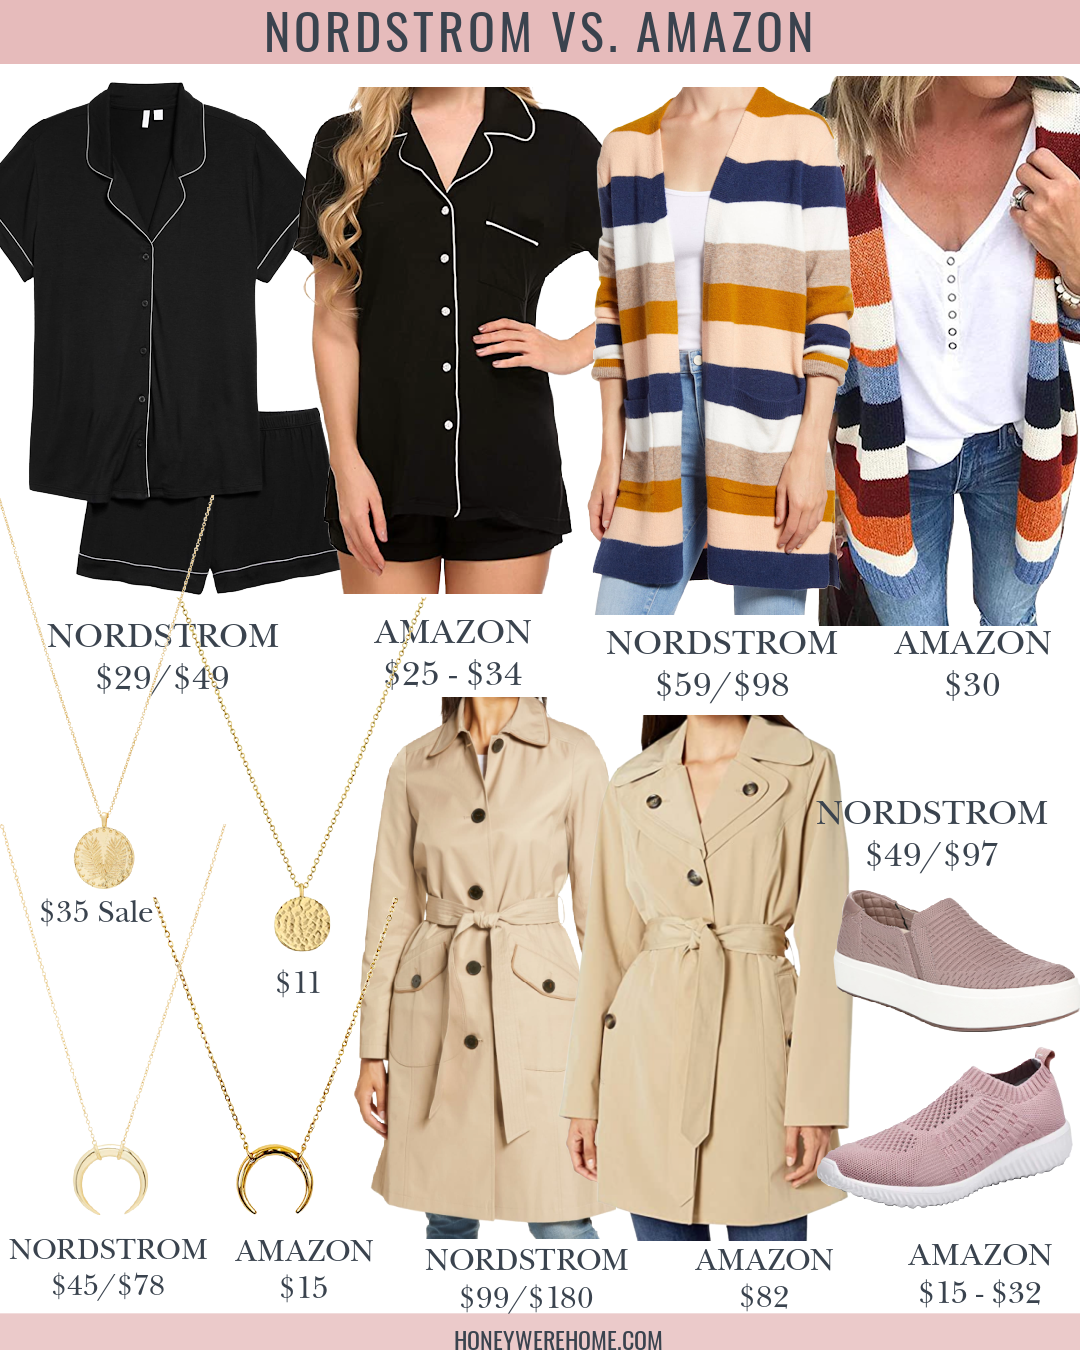 Amazon vs. Nordstrom Fall Fashion